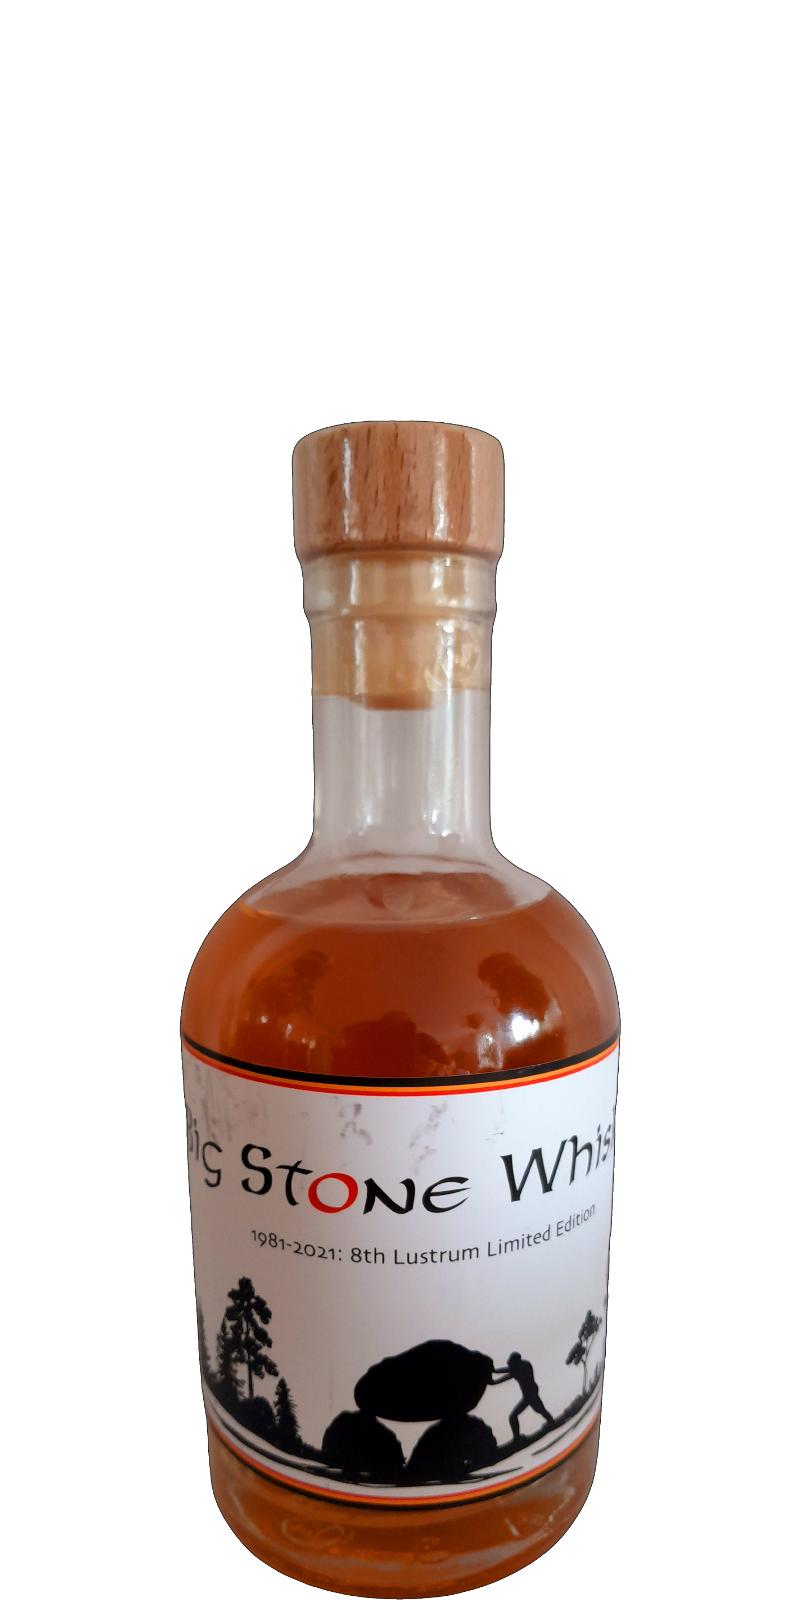 Big Stone Whisky 2018 1981 2021: 8th Lustrum Limited Edition 40yo Rugbyclub The Big Stones Havelte 51.4% 250ml